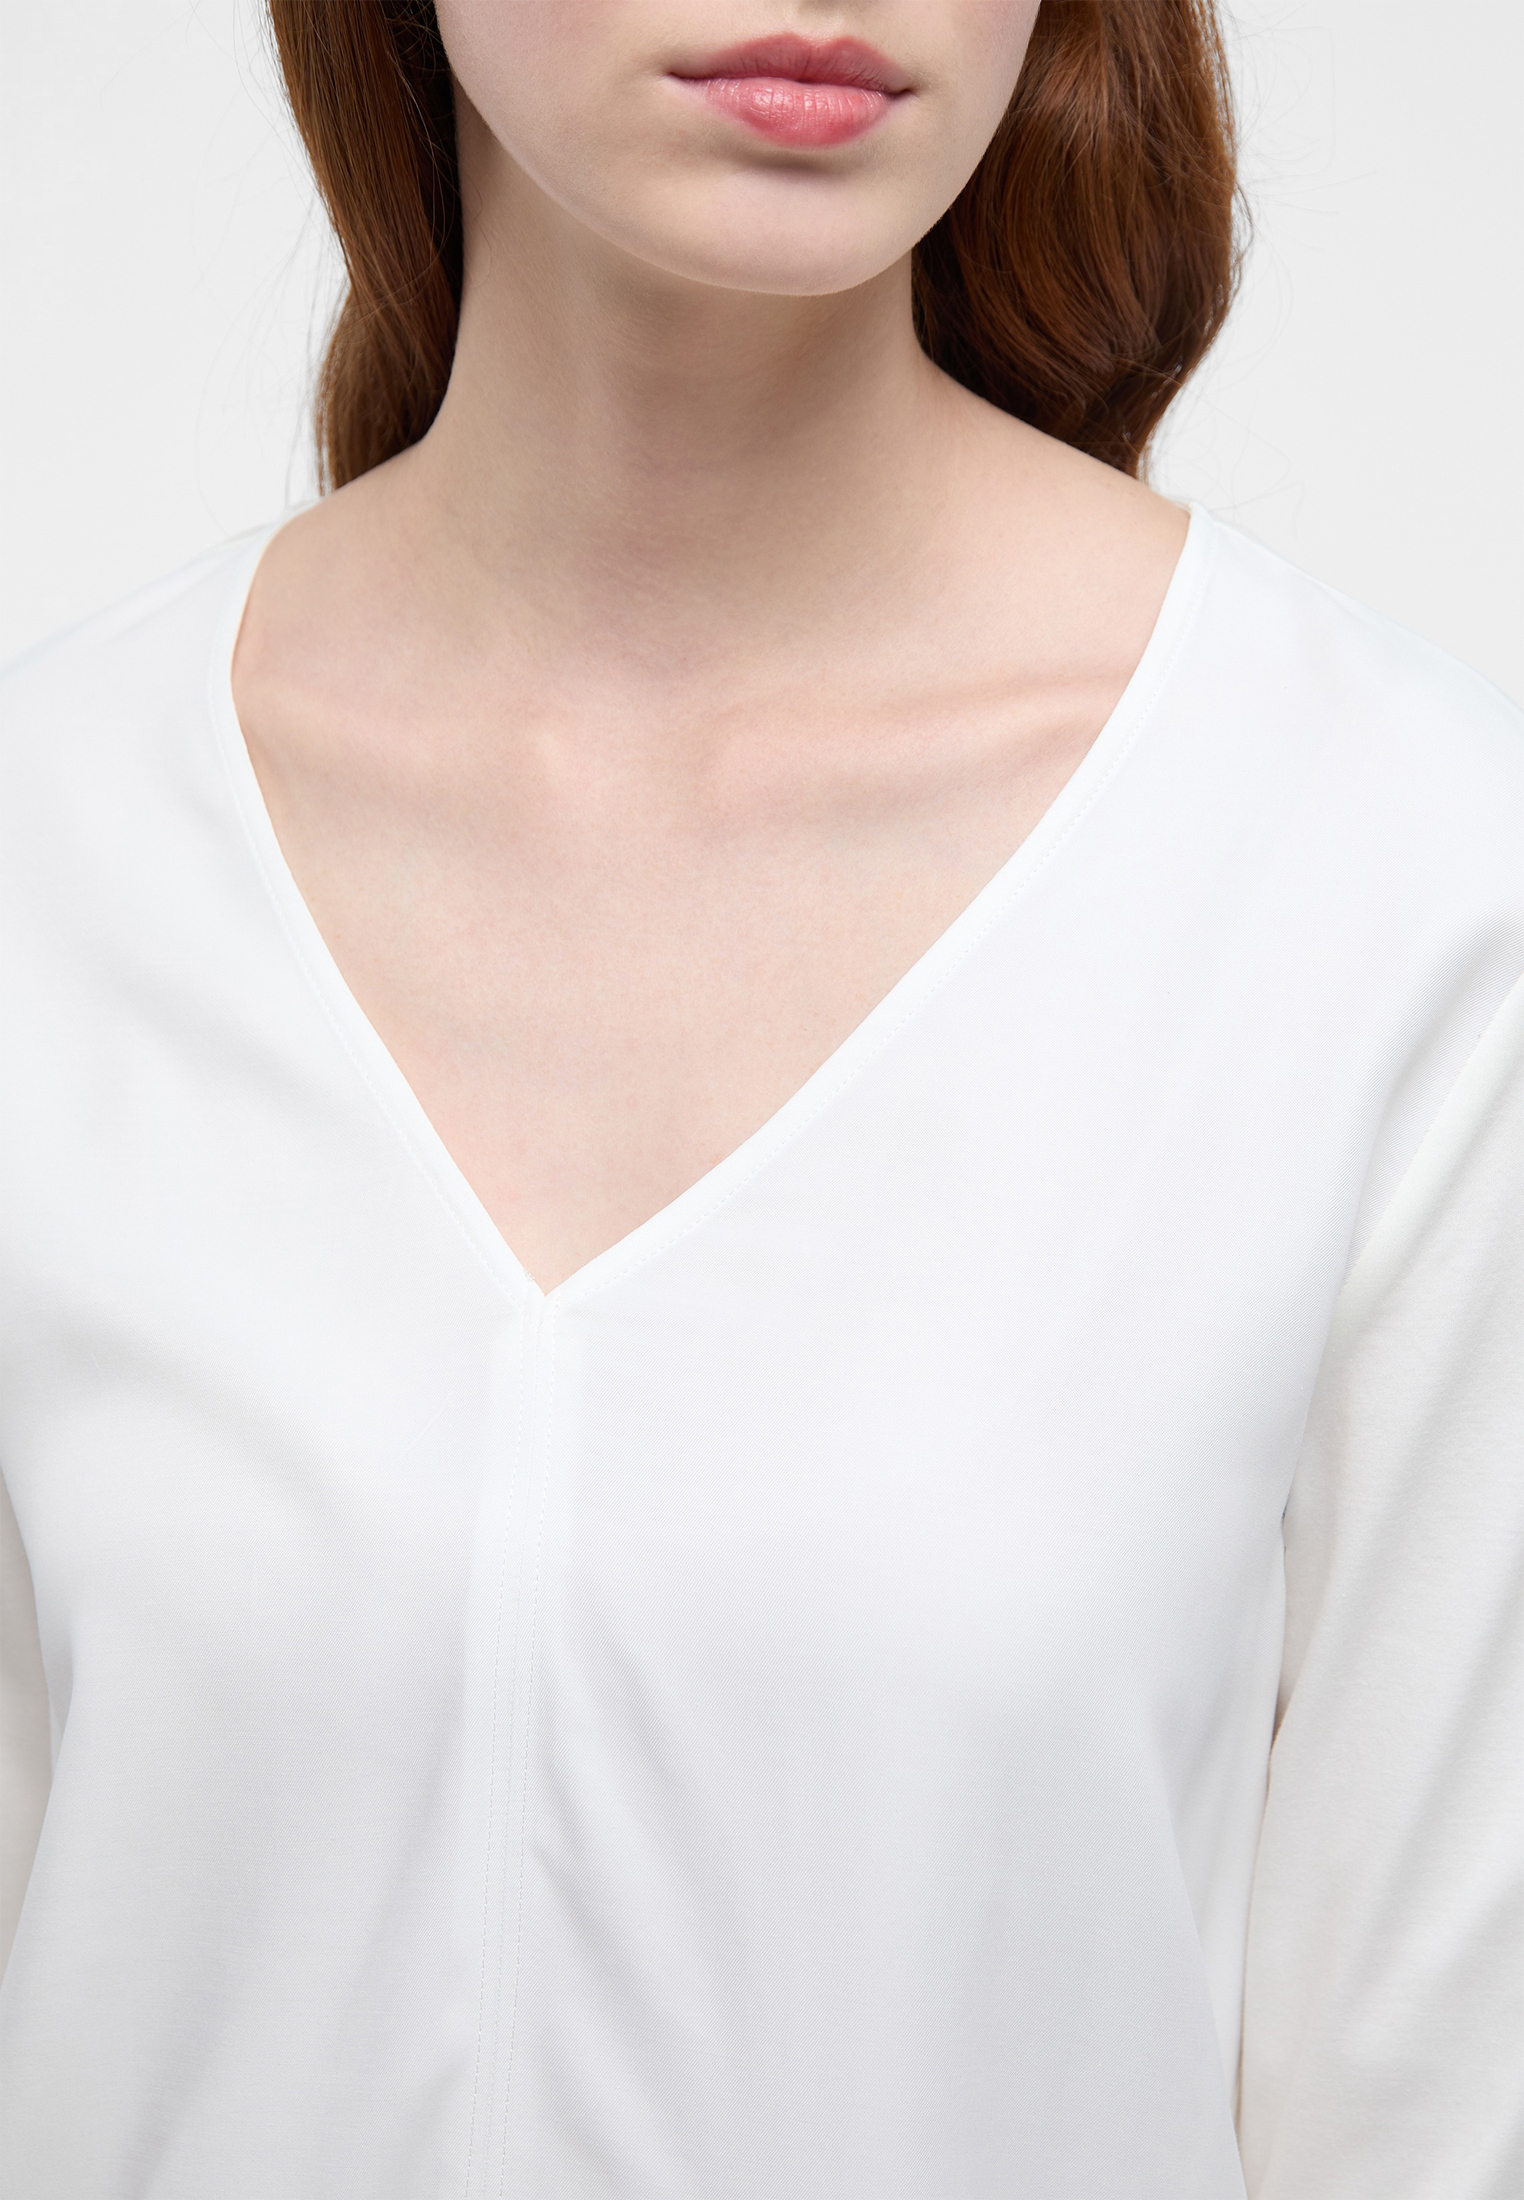 | | in | 2BL04252-00-02-46-1/1 Viscose unifarben | Langarm Shirt 46 Bluse off-white off-white